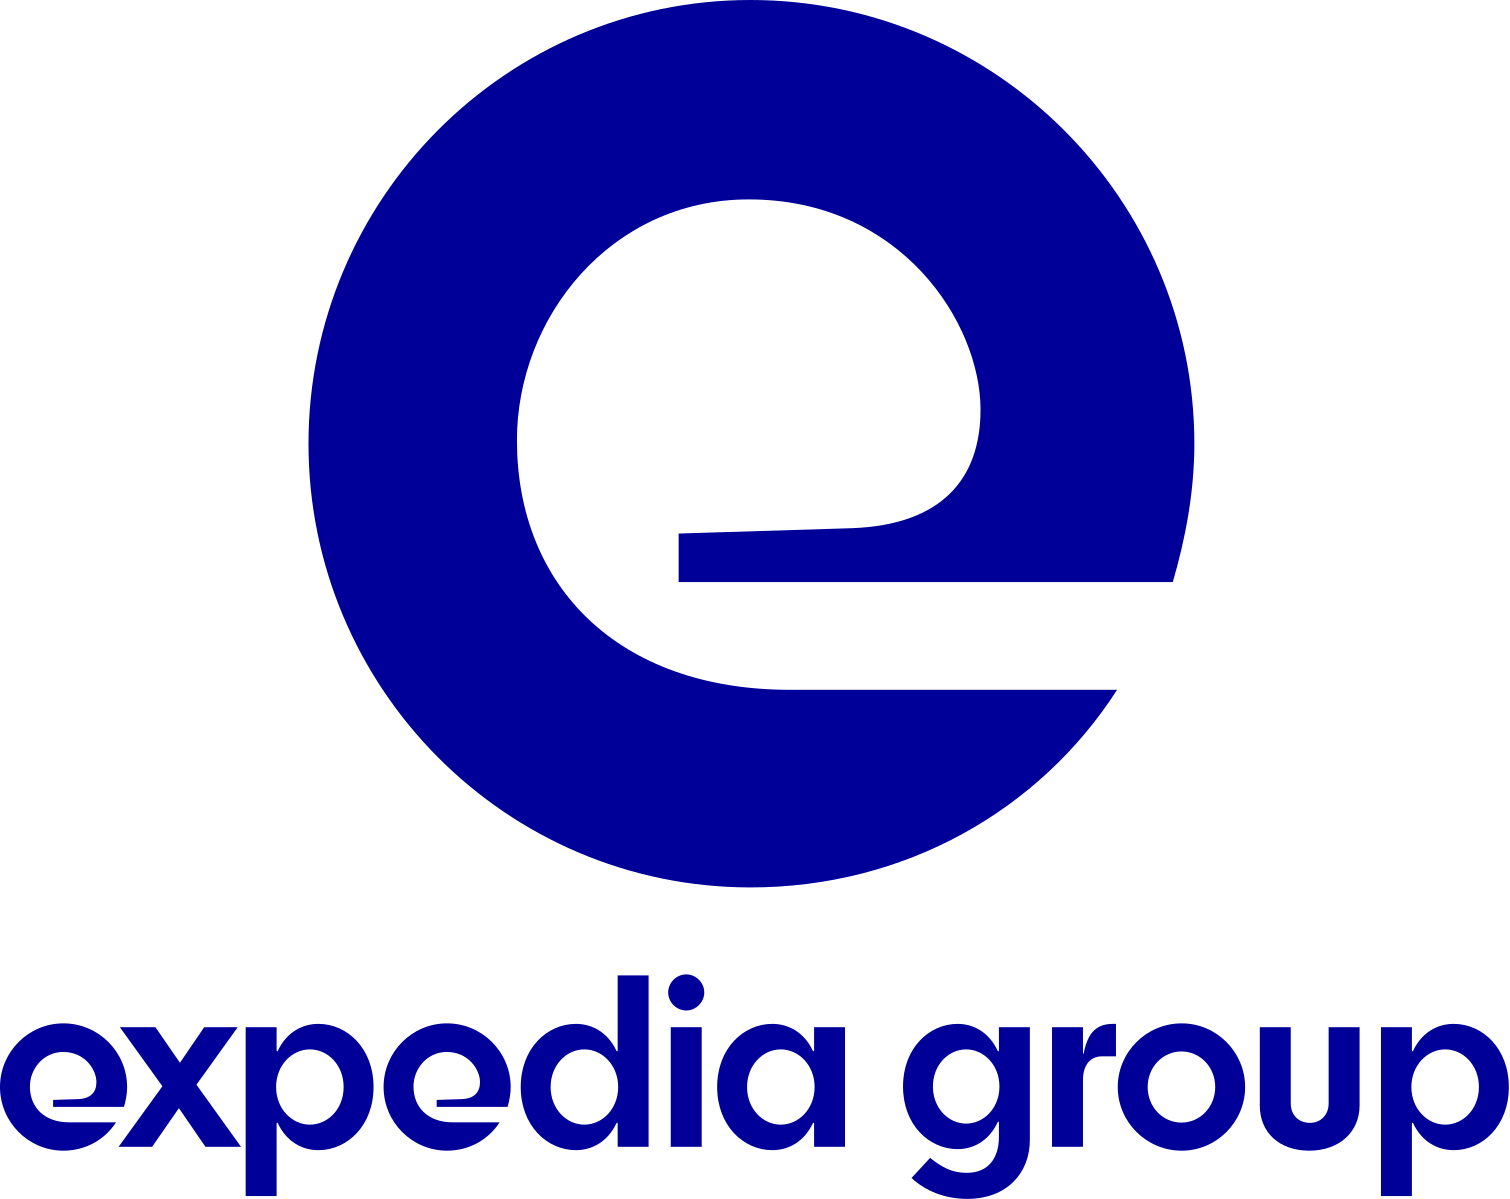 Expedia Group logo svg